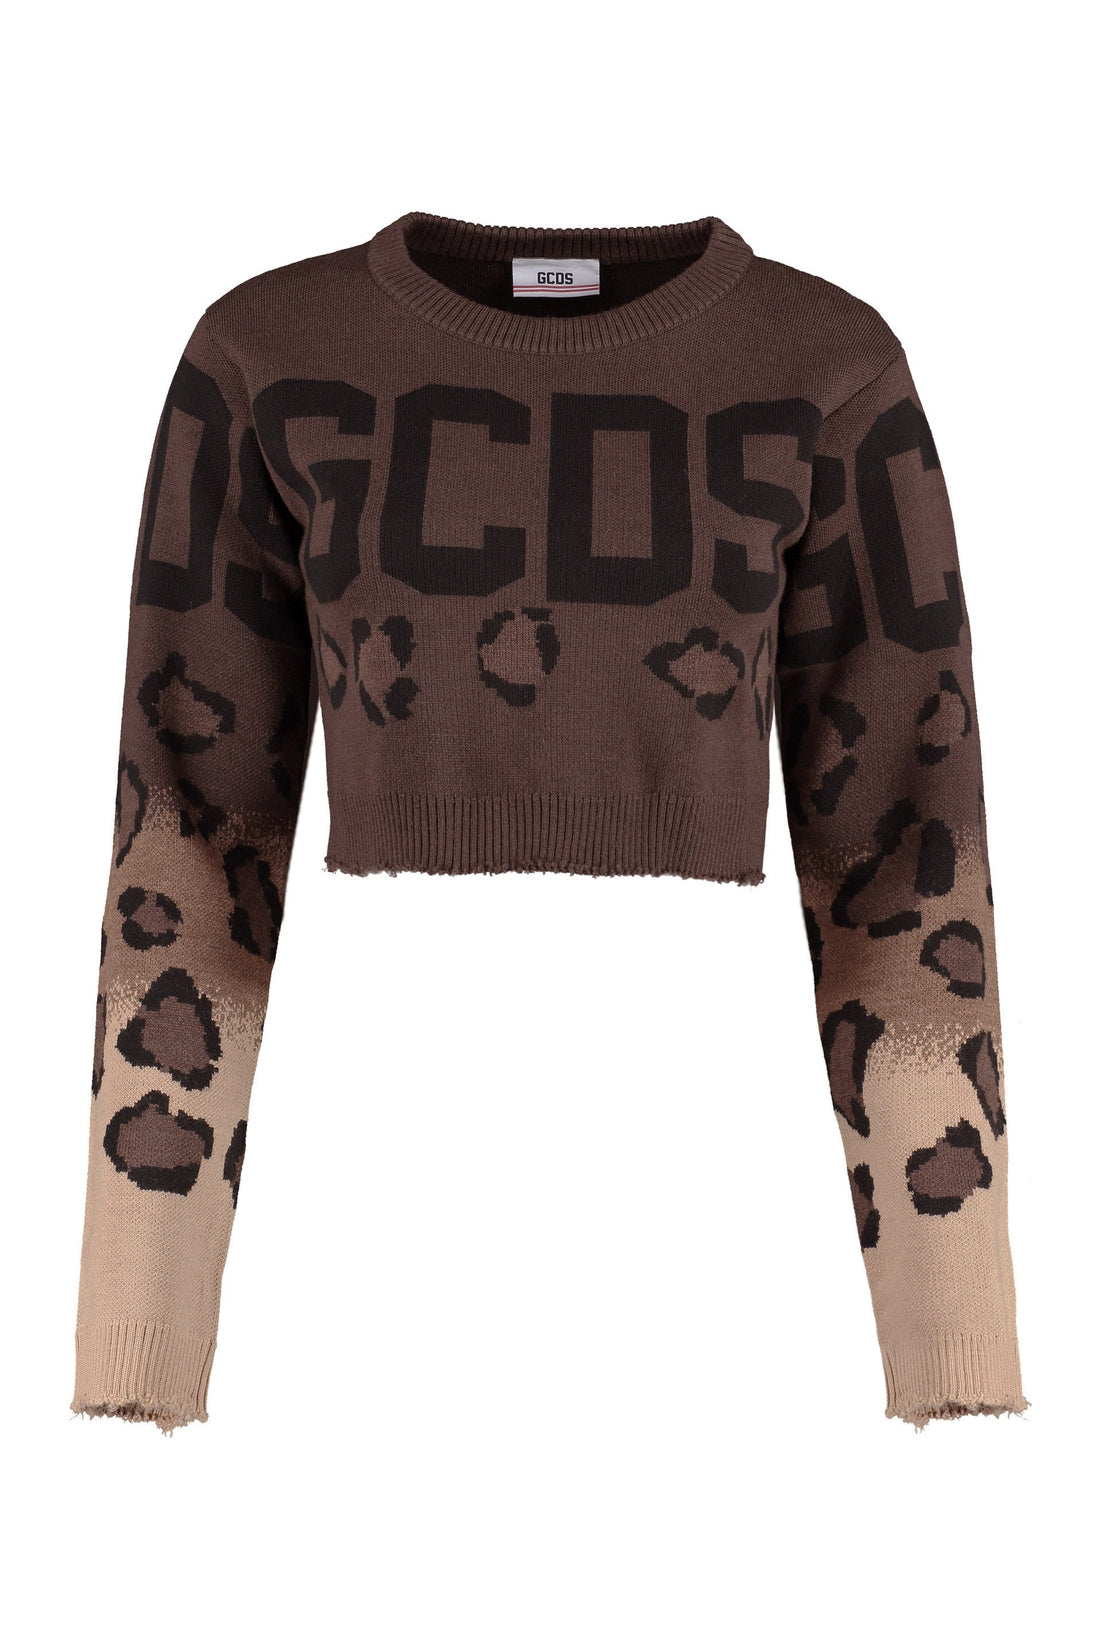 GCDS-OUTLET-SALE-Wool blend sweater-ARCHIVIST